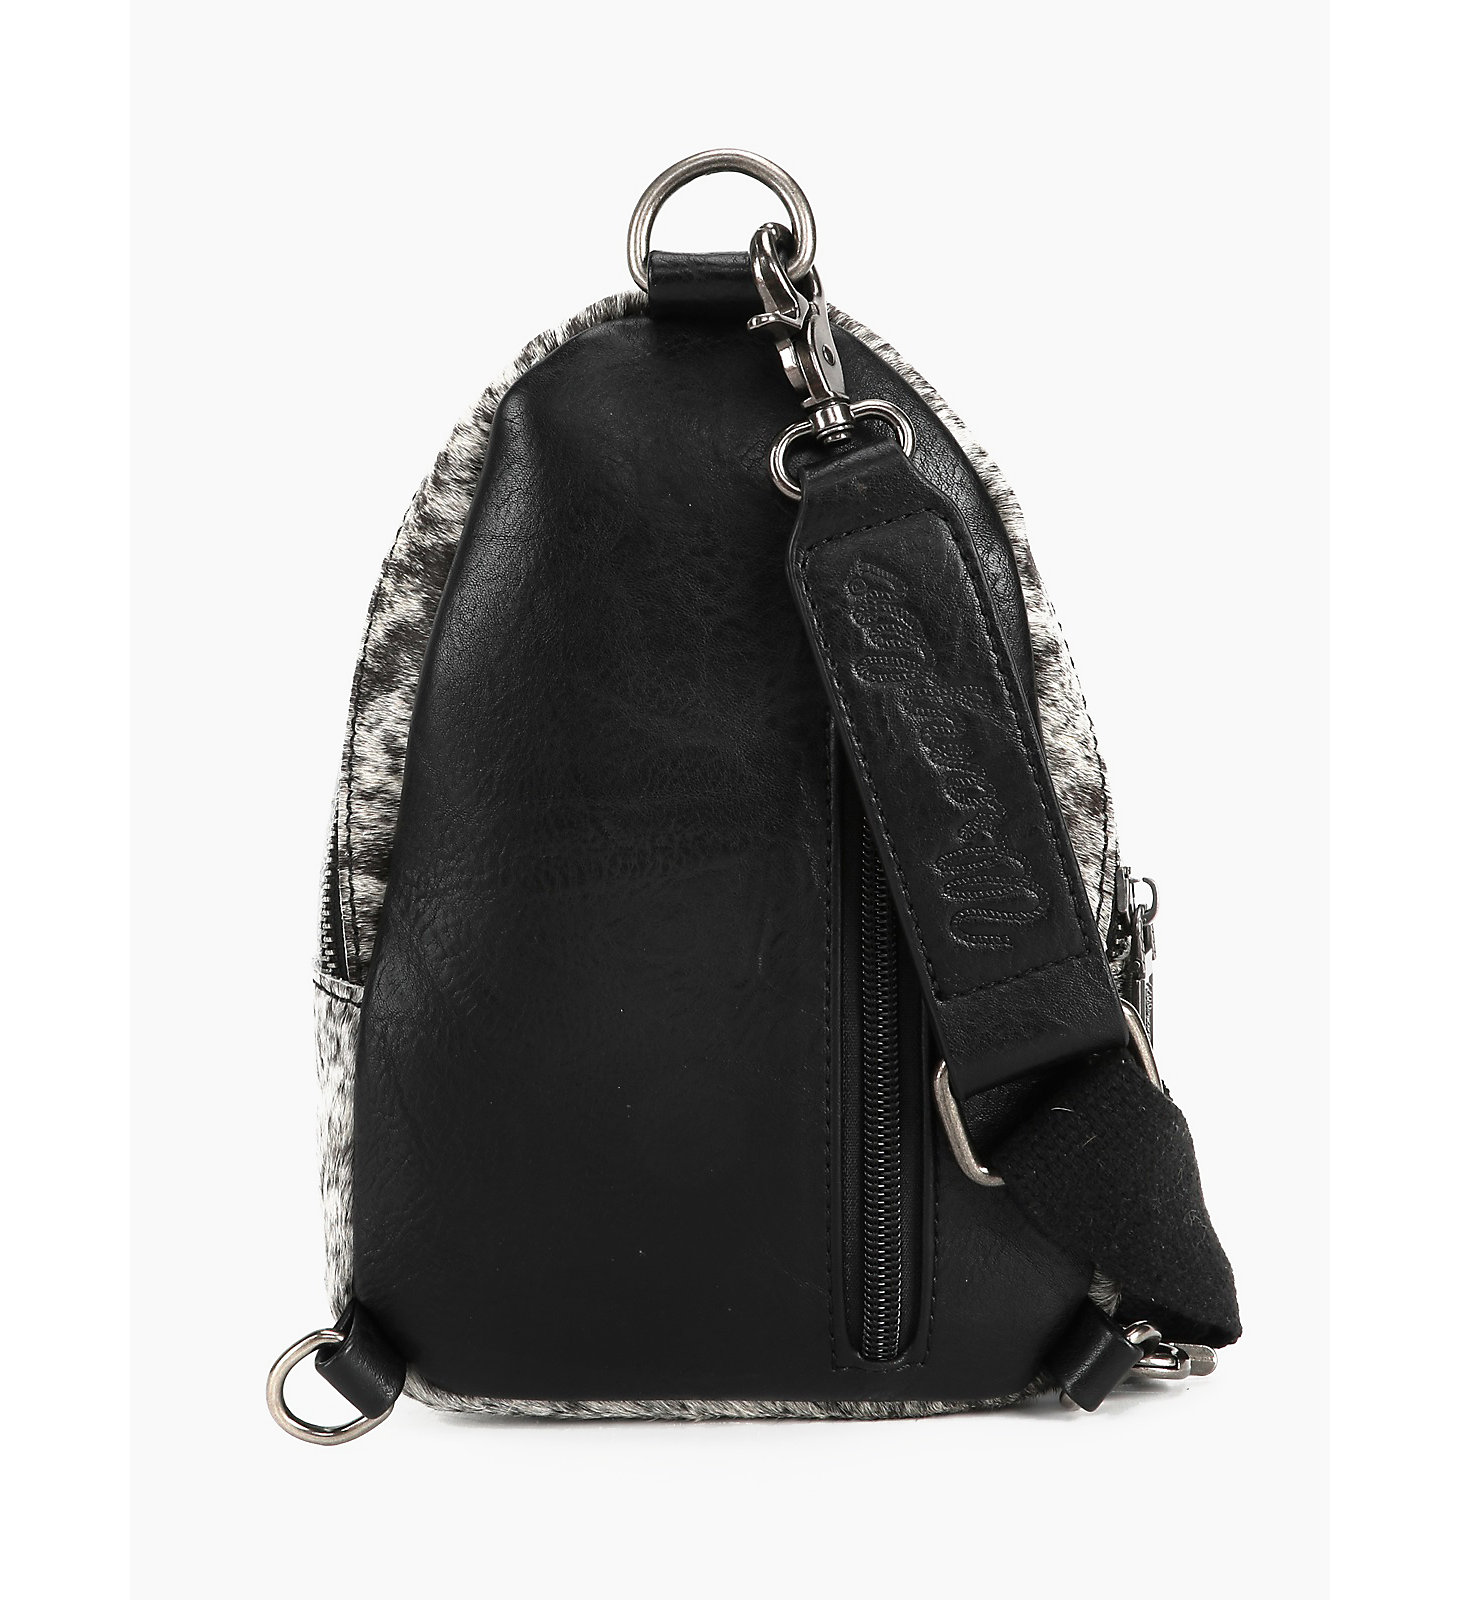 Women's Cowhide Belt Bag in Black alternative view 1